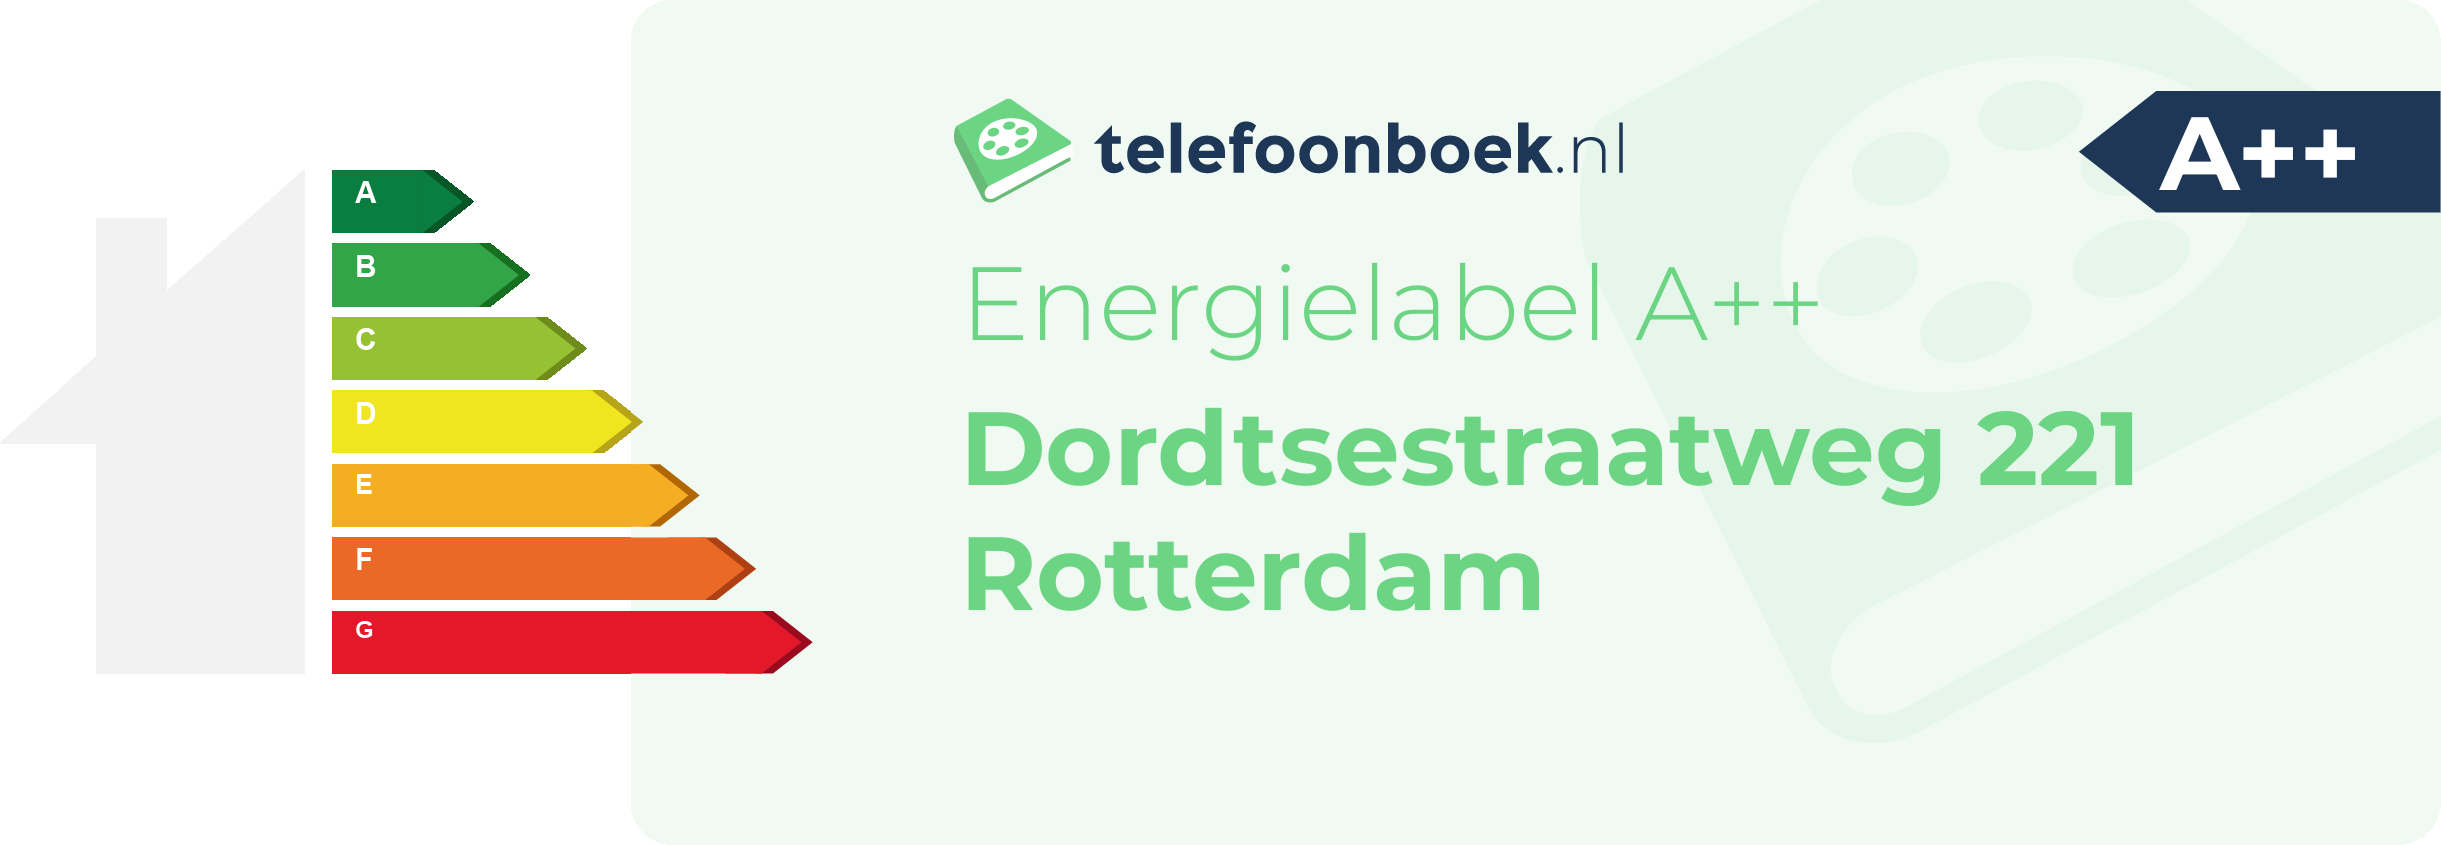 Energielabel Dordtsestraatweg 221 Rotterdam